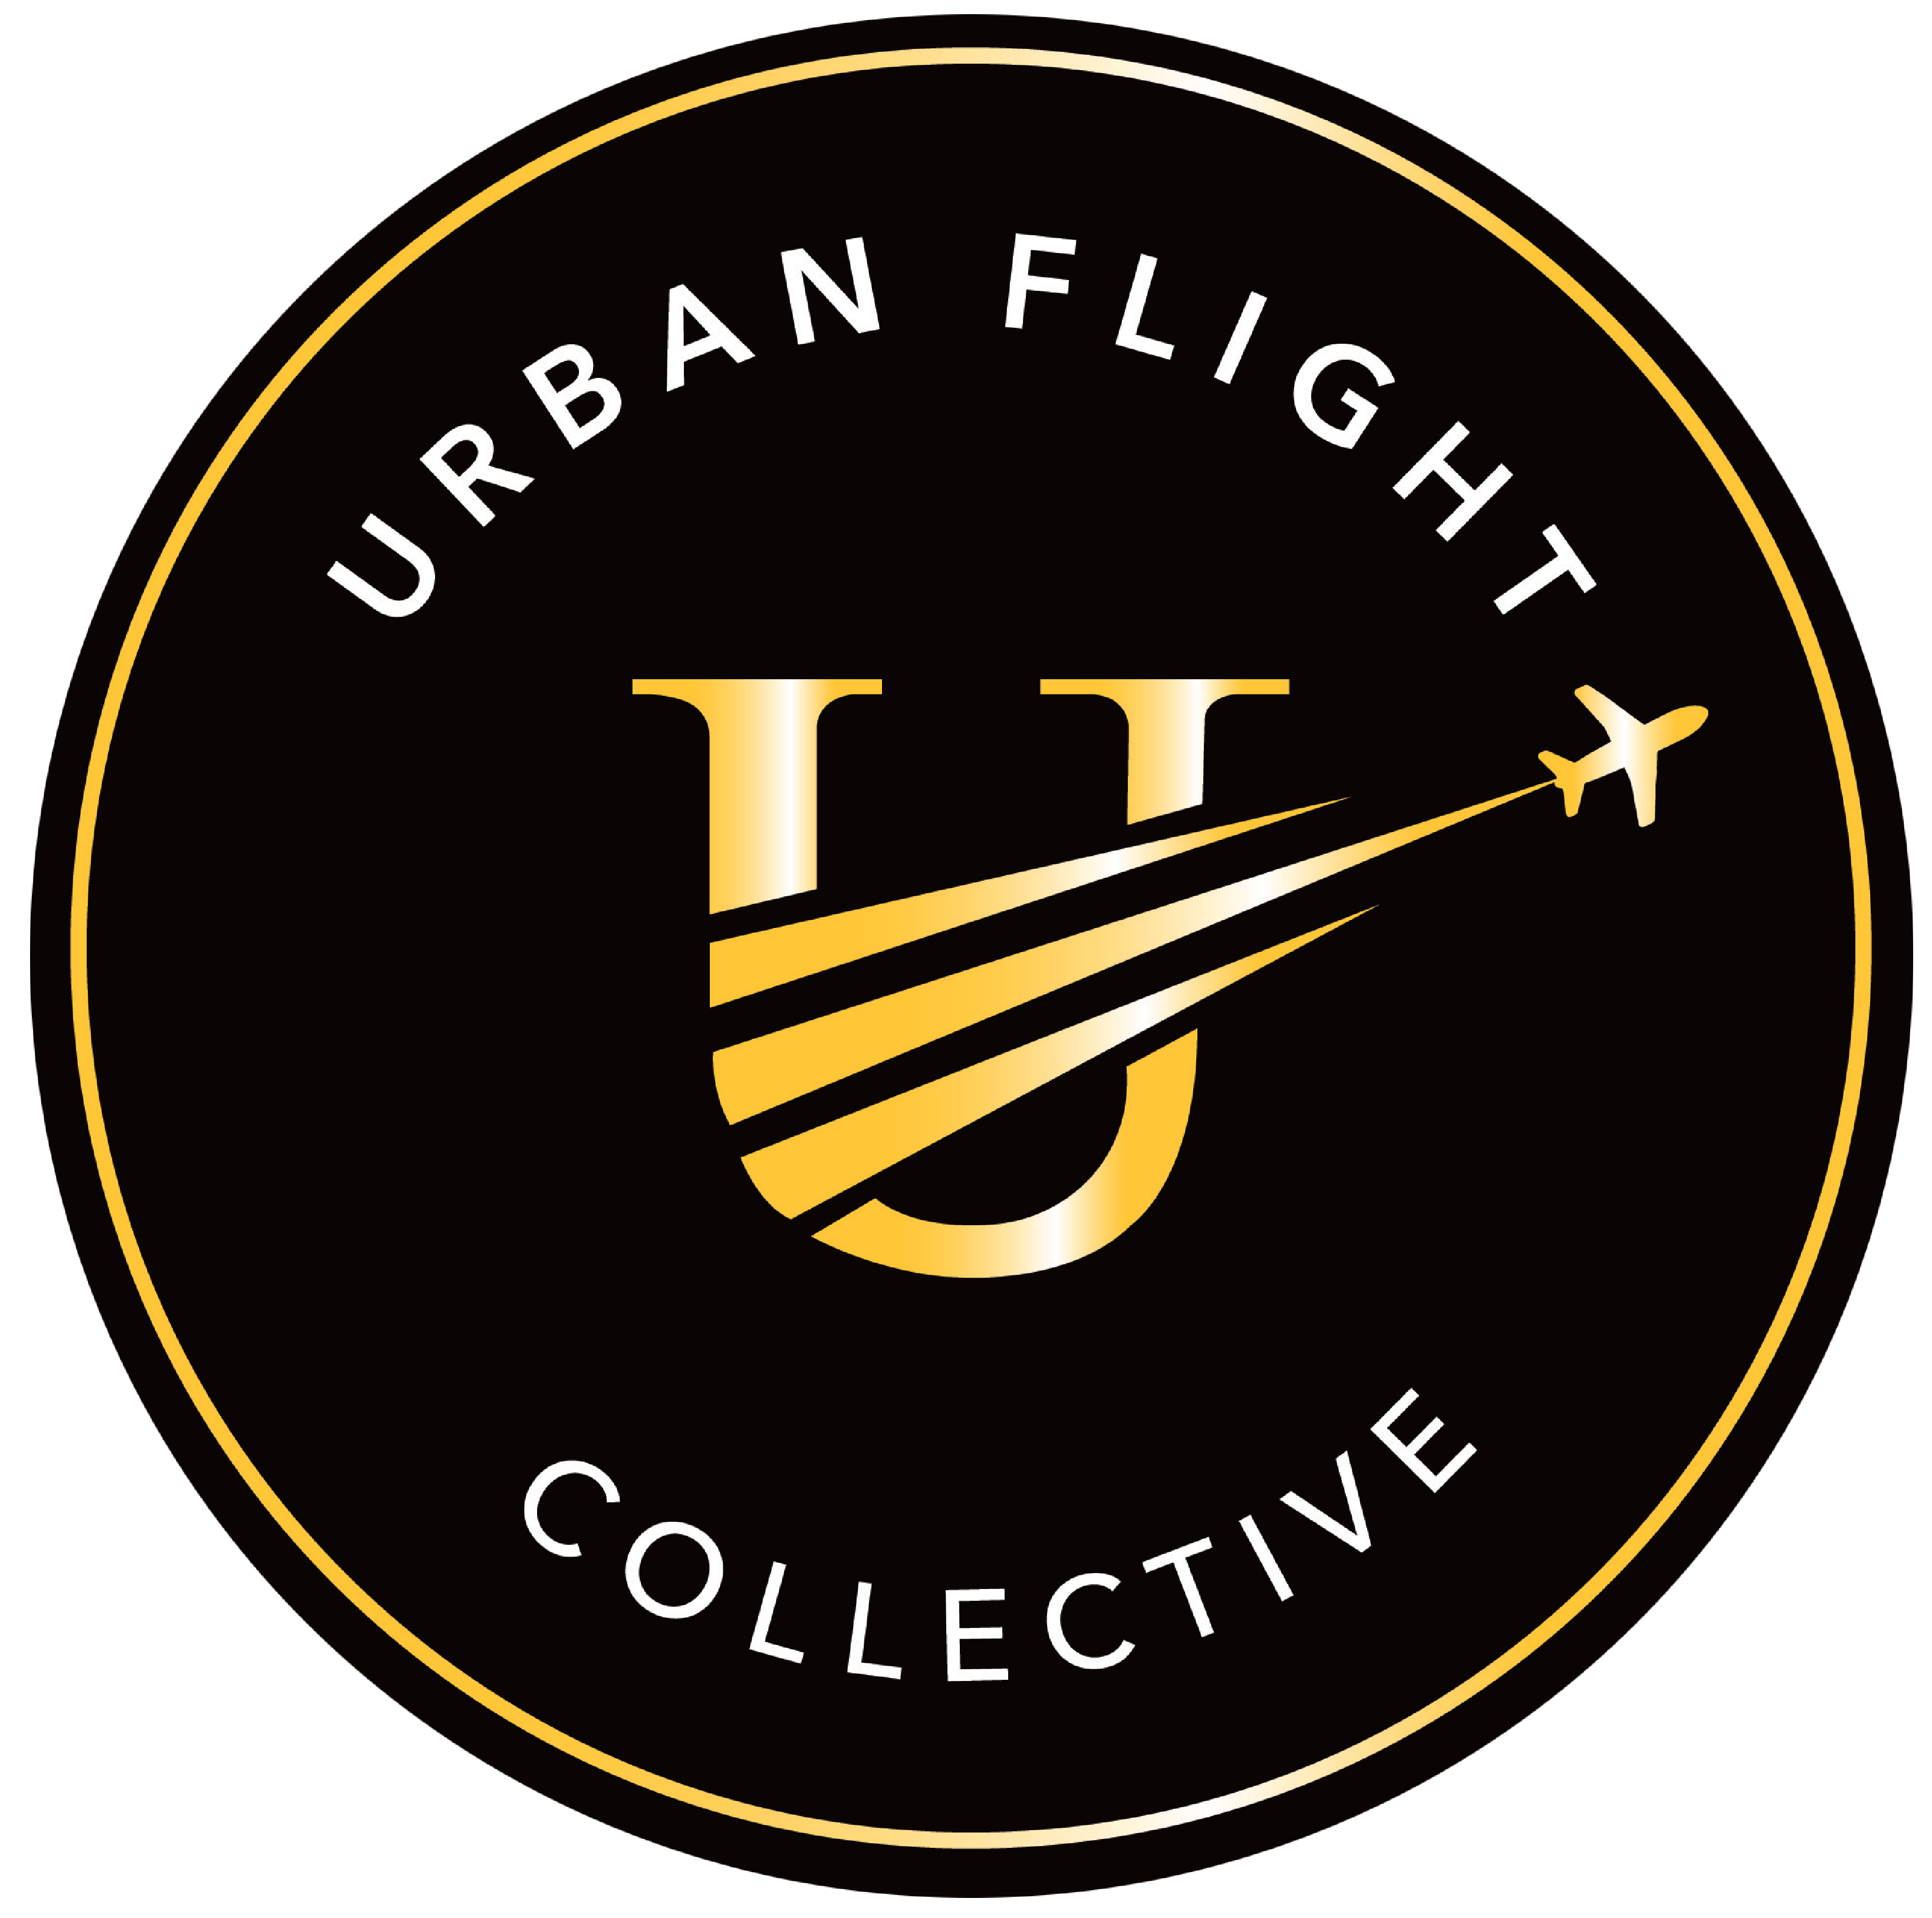 UrbanFlightCollective